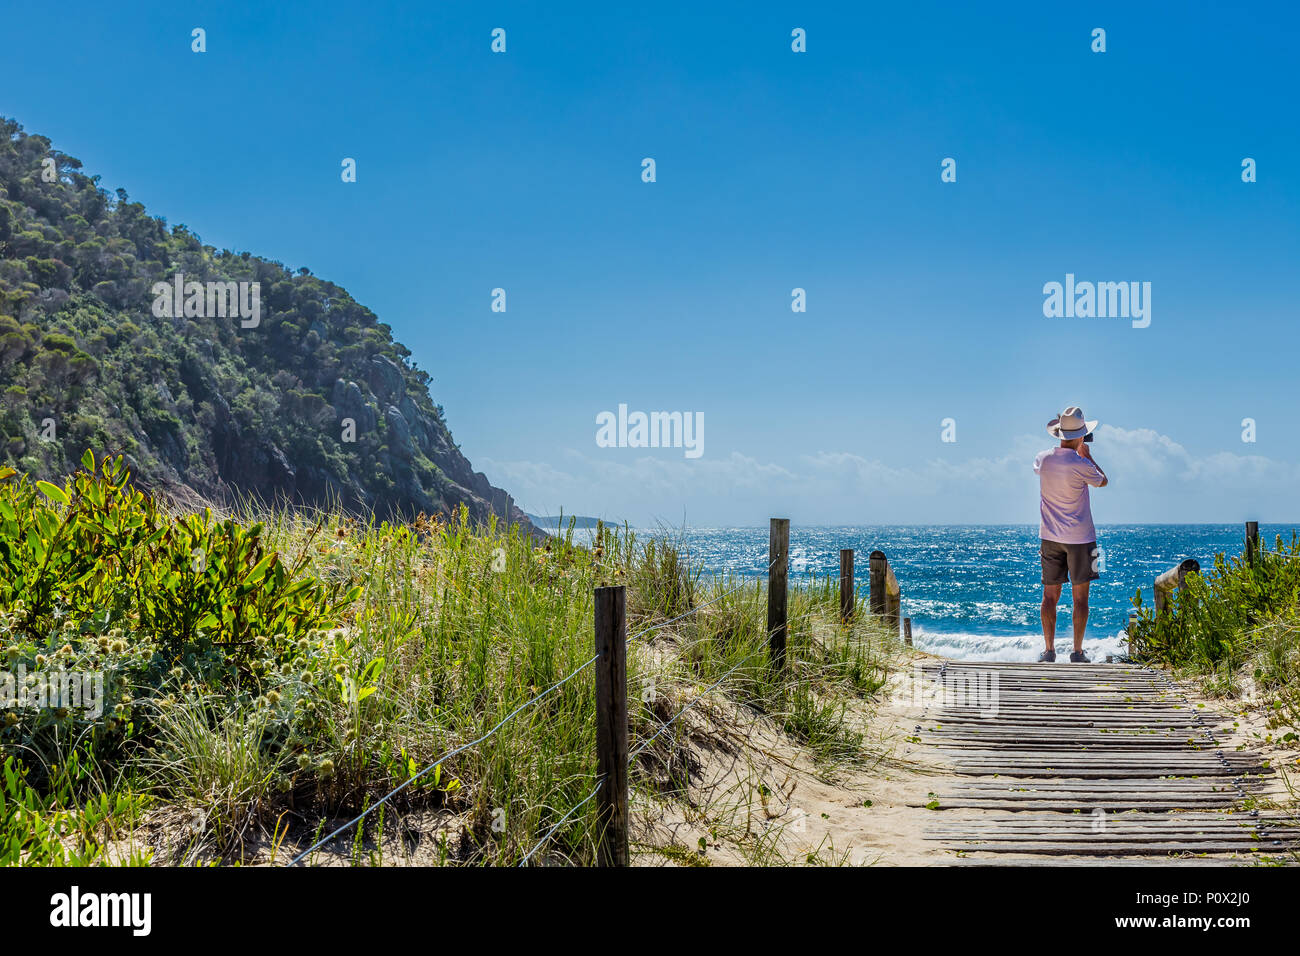 Ma n taking a photo with his phone on Zenith Beach, Port Stephens, NSW, Australia Stock Photo